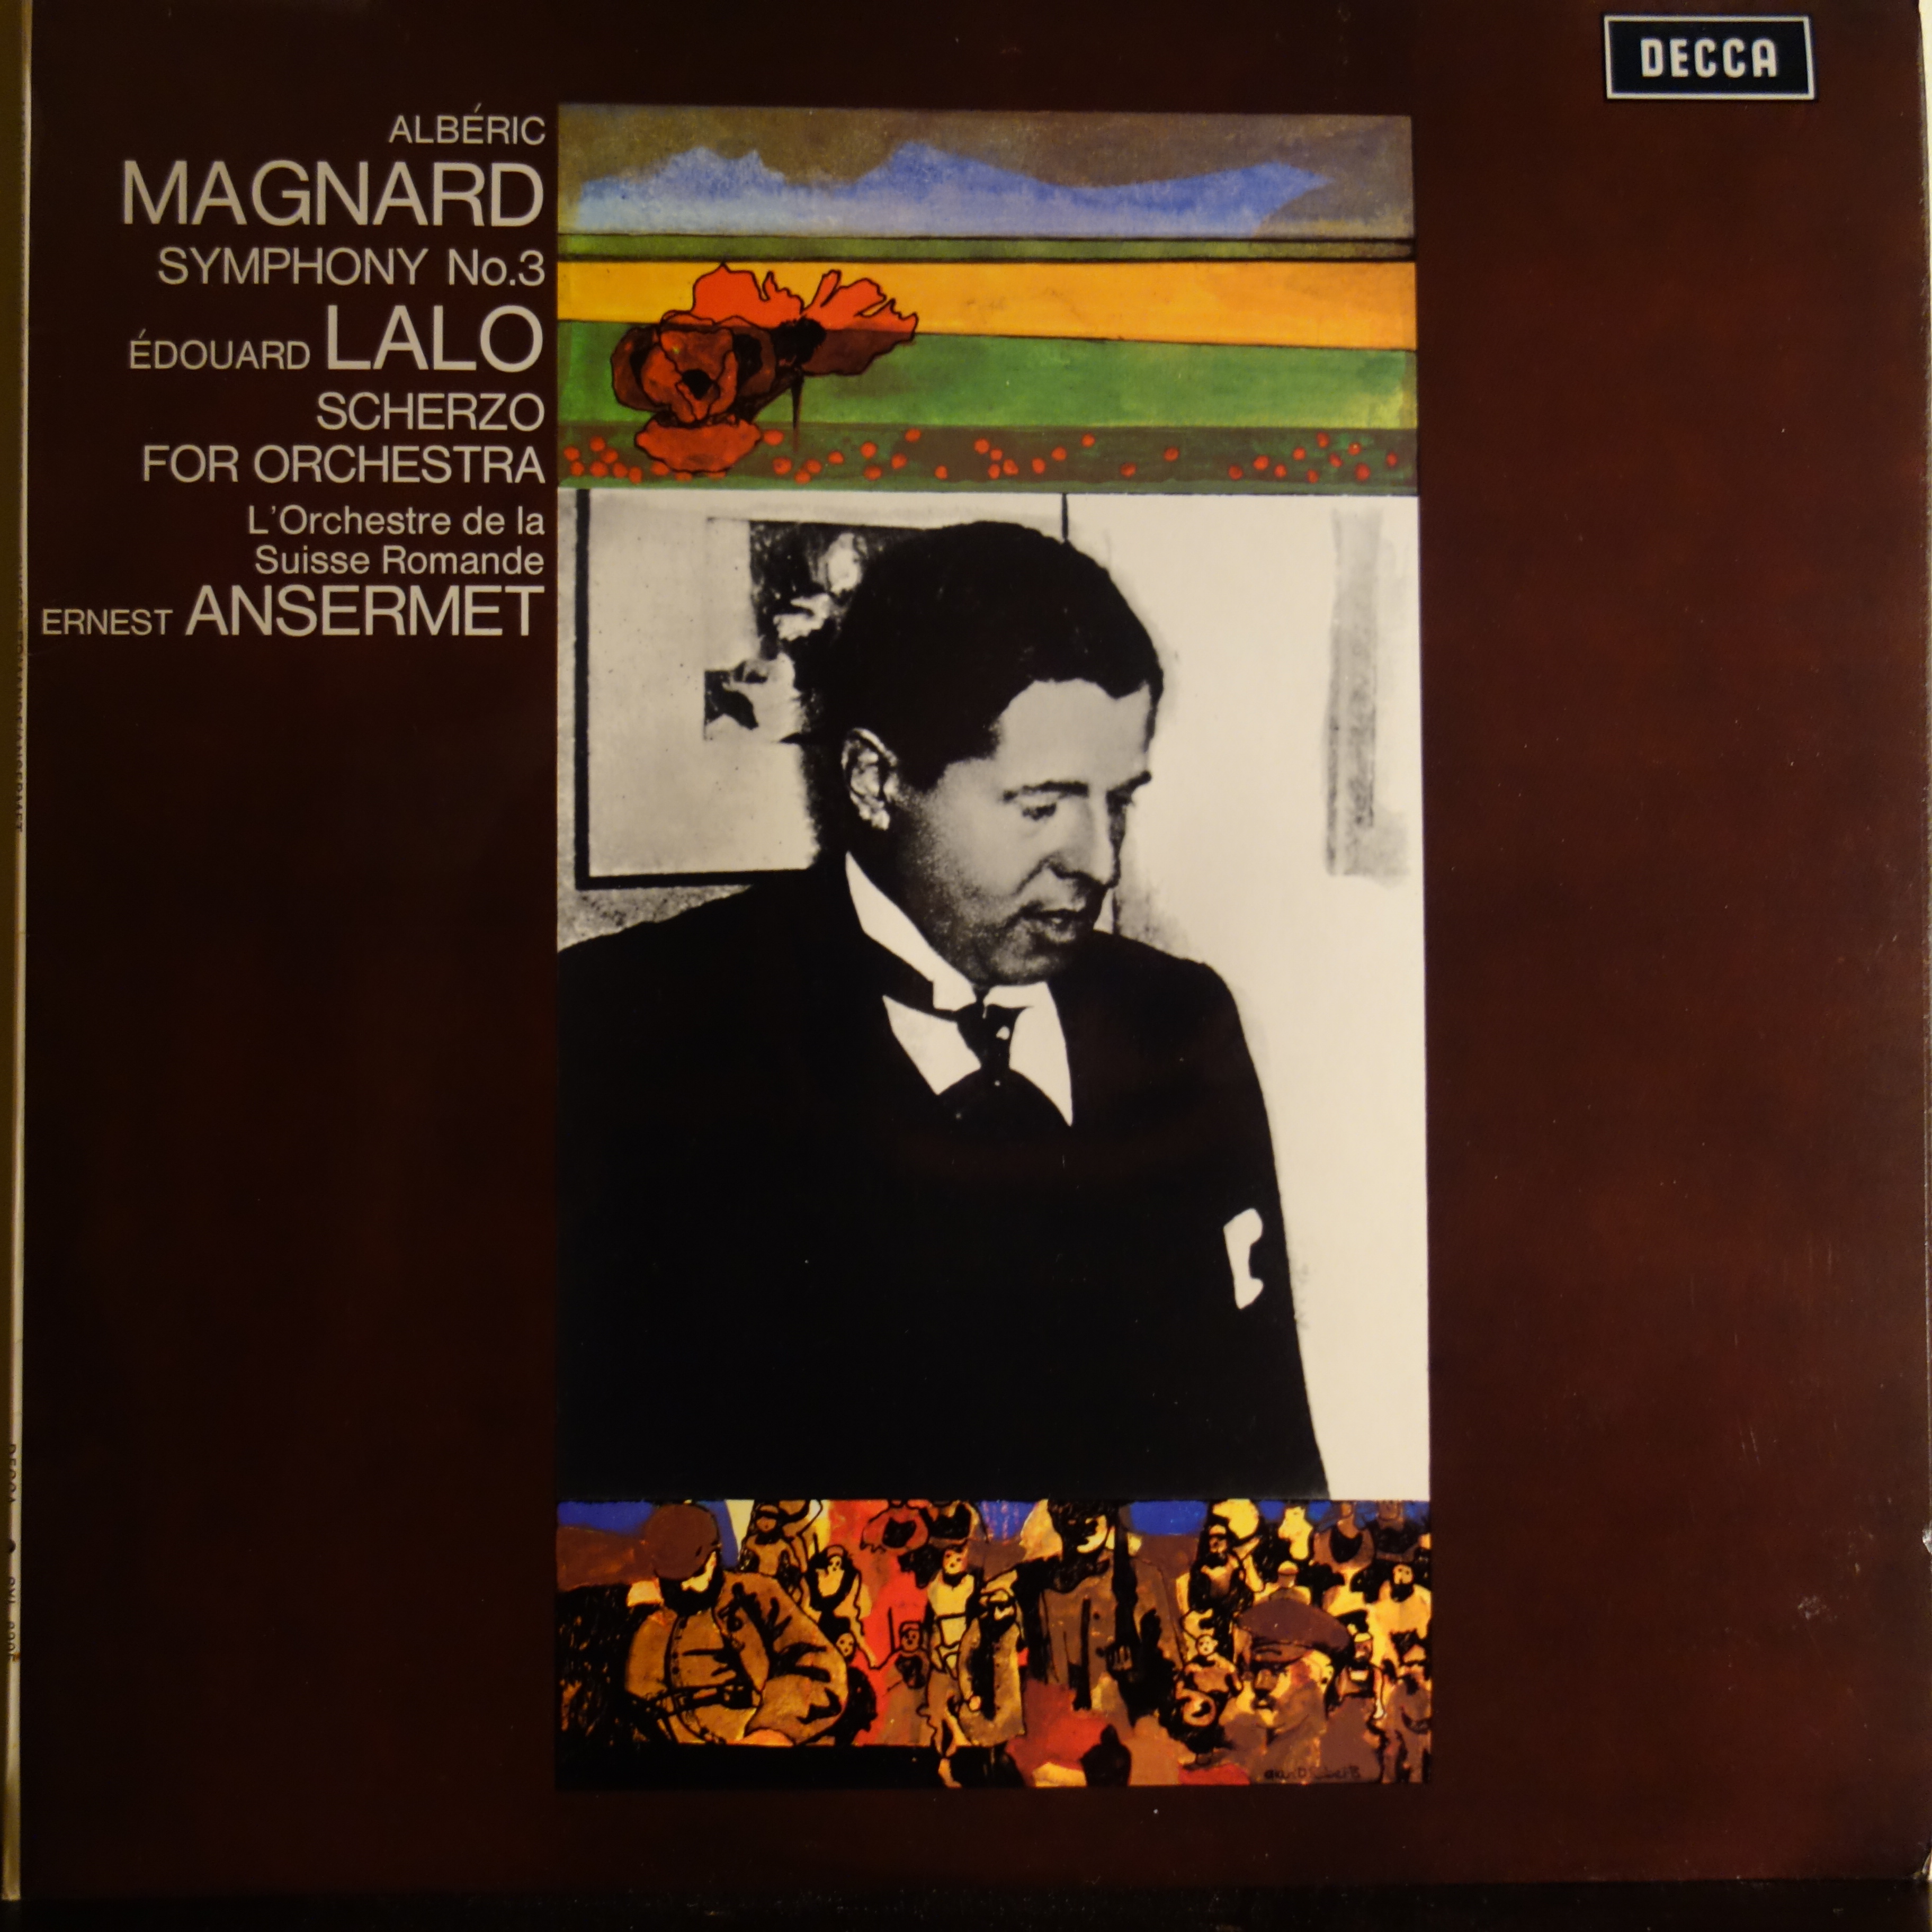 SXL 6395 Magnard Symphony No. 3 / Lal0 Scherzo For Orchestra / Ansermet / OSR